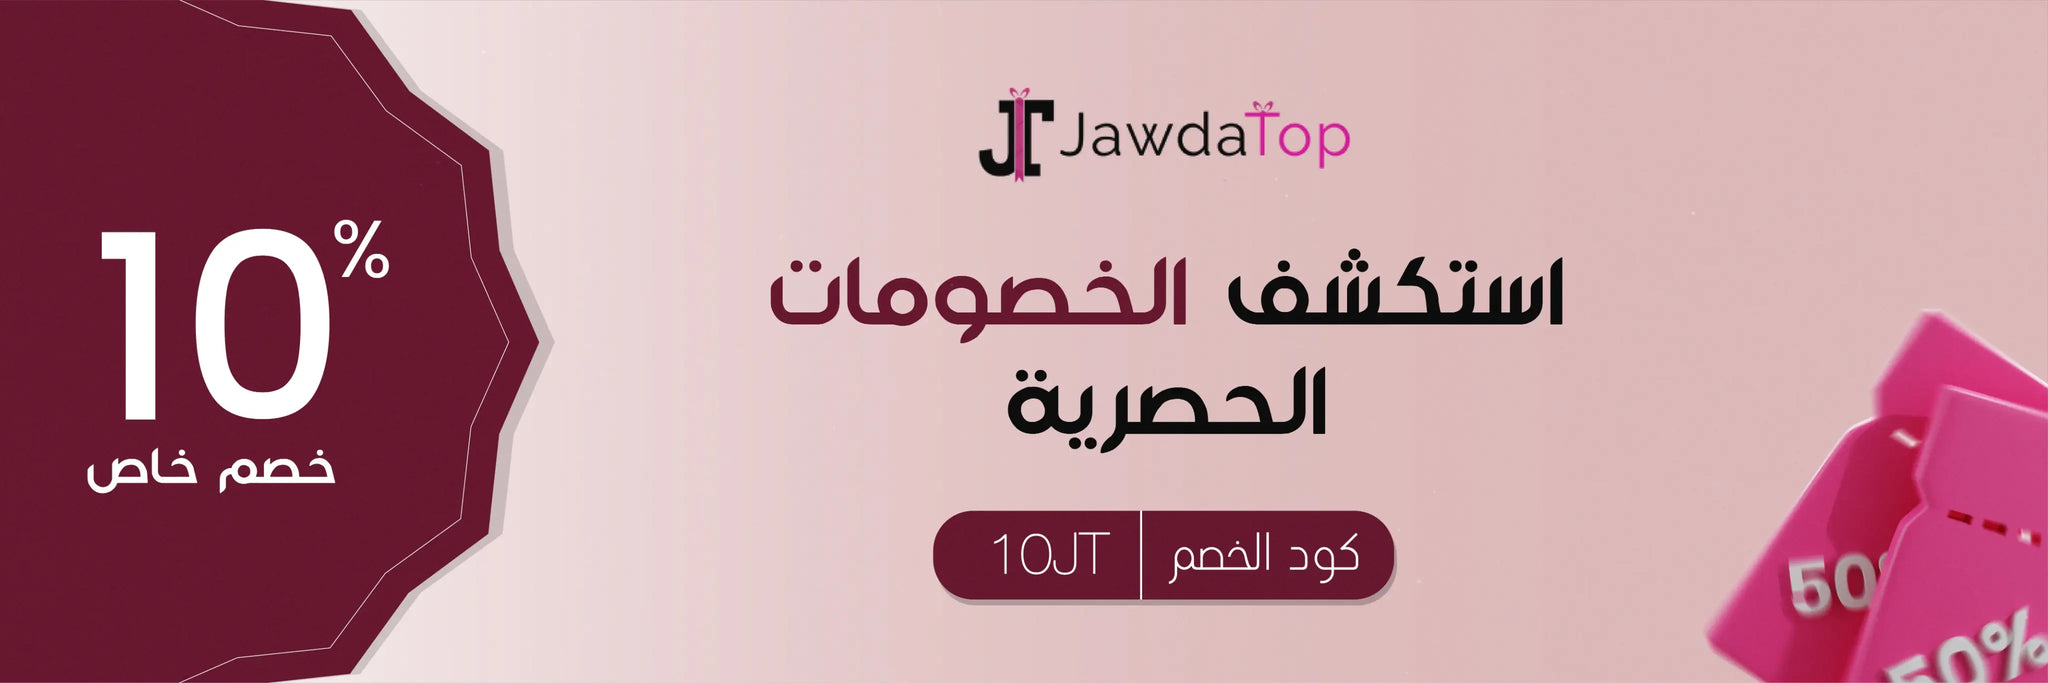 banner 2 - JawdaTop